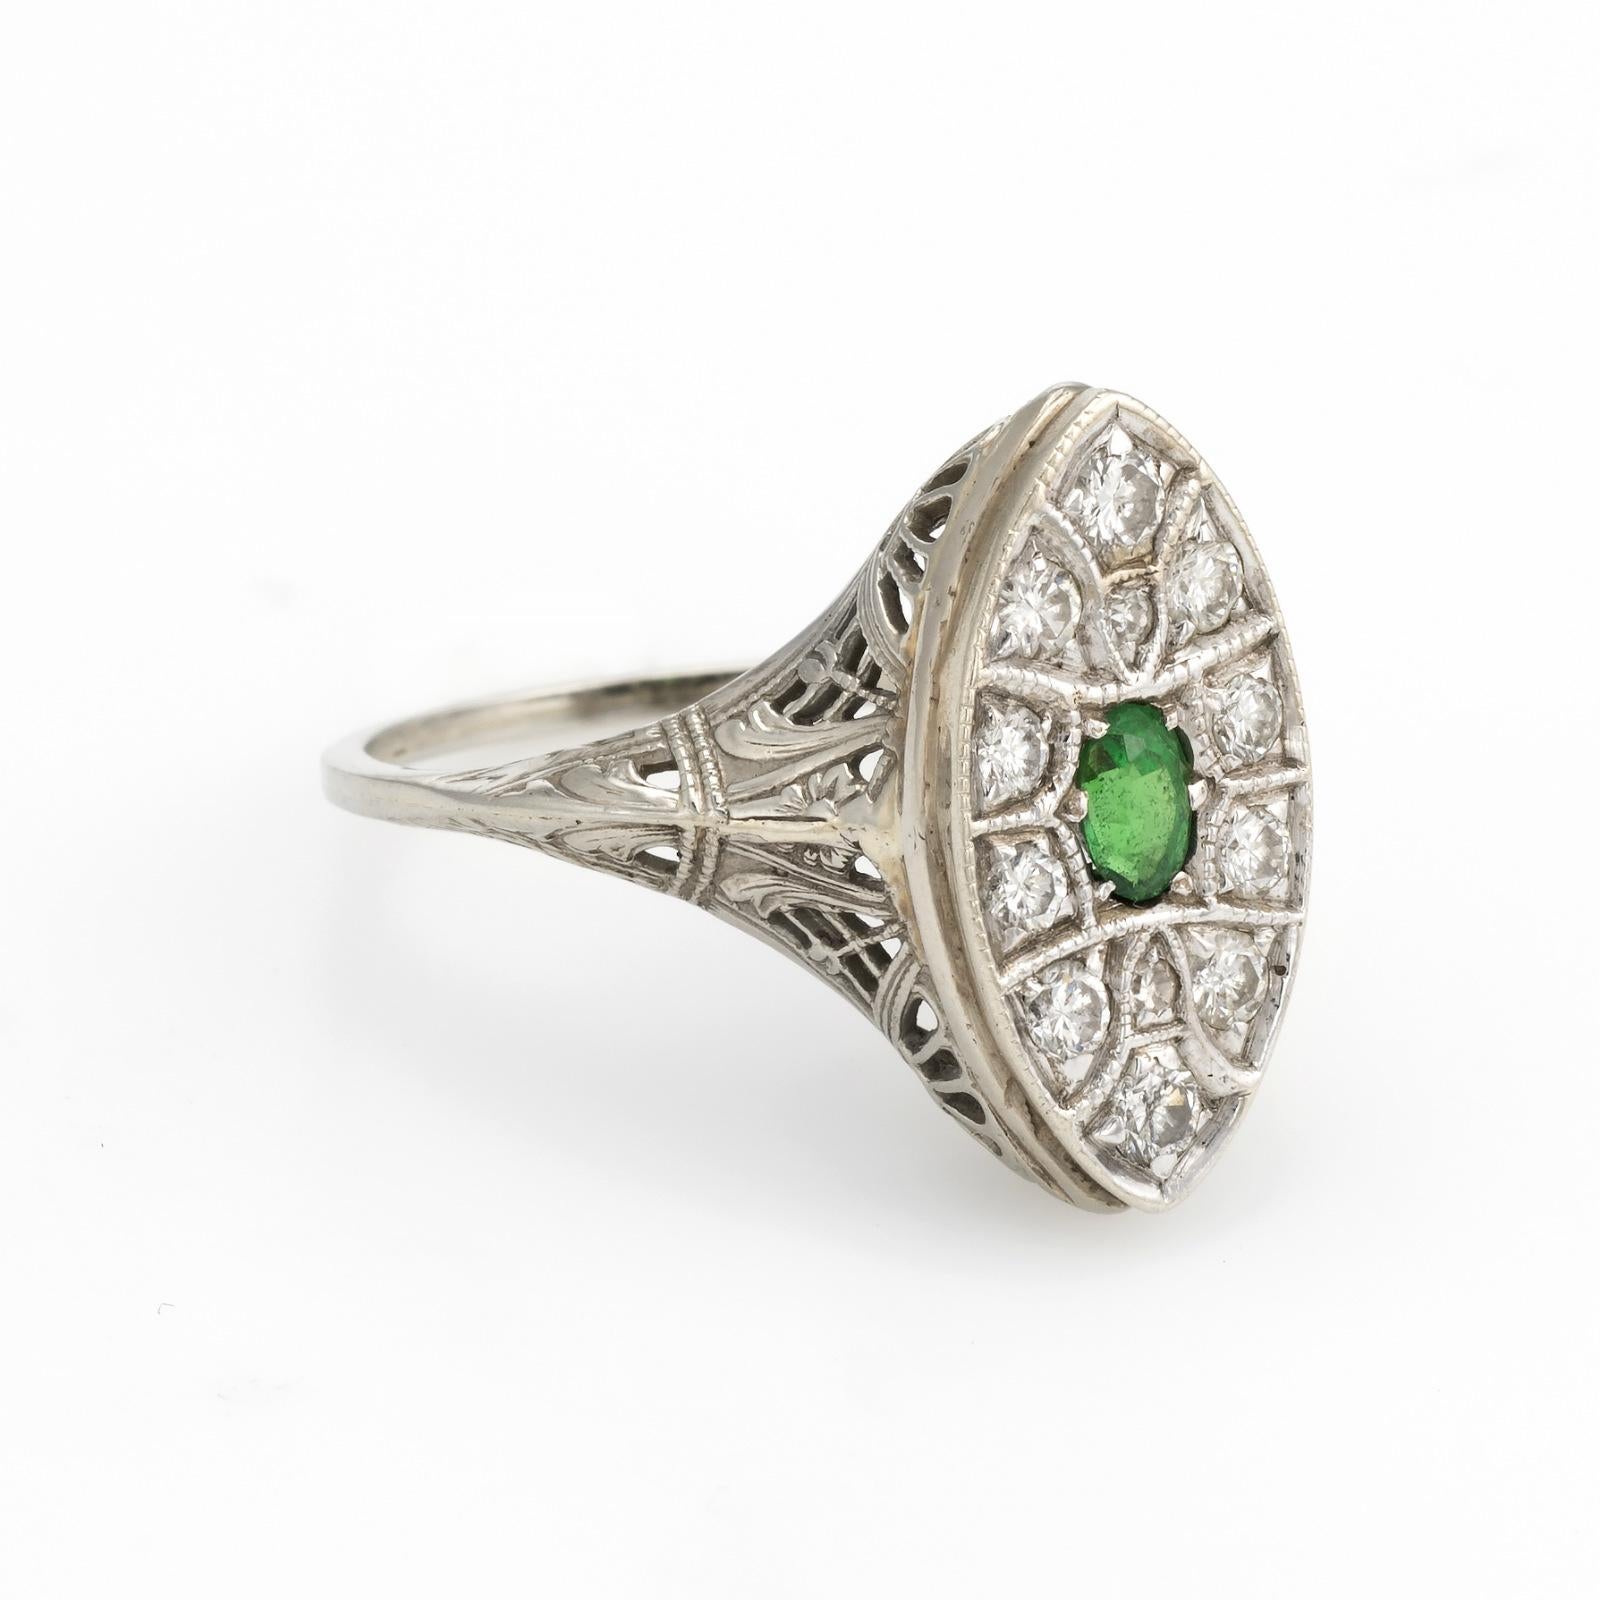 Oval Cut Vintage Art Deco Diamond Ring Navette Emerald 14k White Gold Filigree